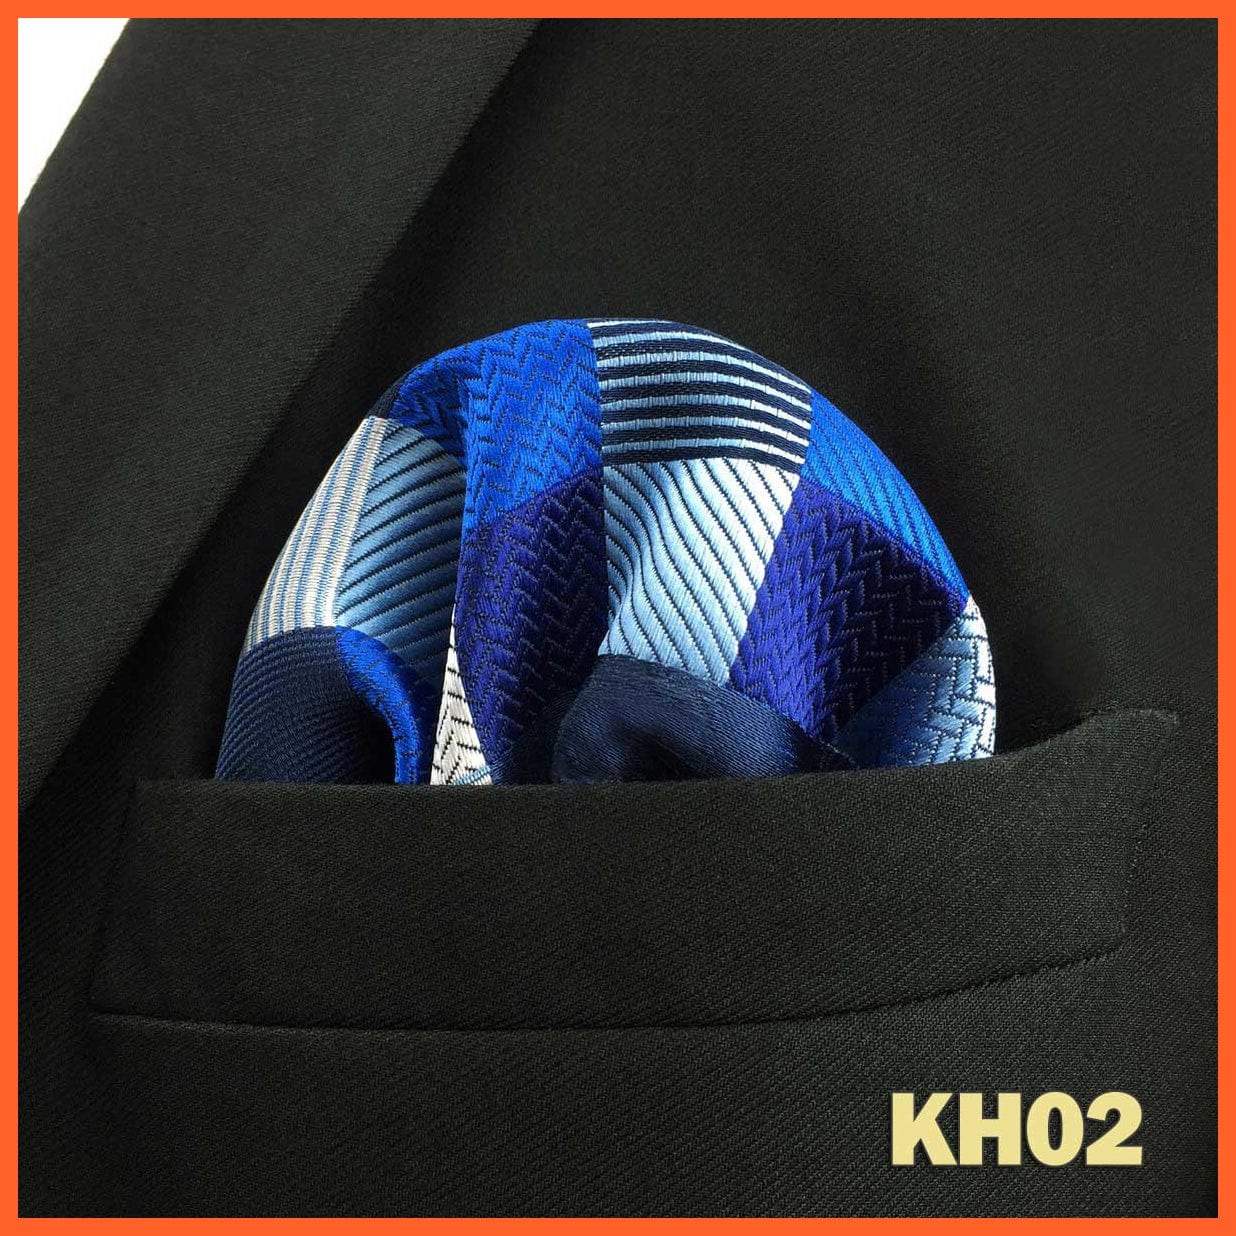 whatagift.com.au Handkerchief KH02 Colorful Multicolor Pocket Square Men's Classic Striped Handkerchief